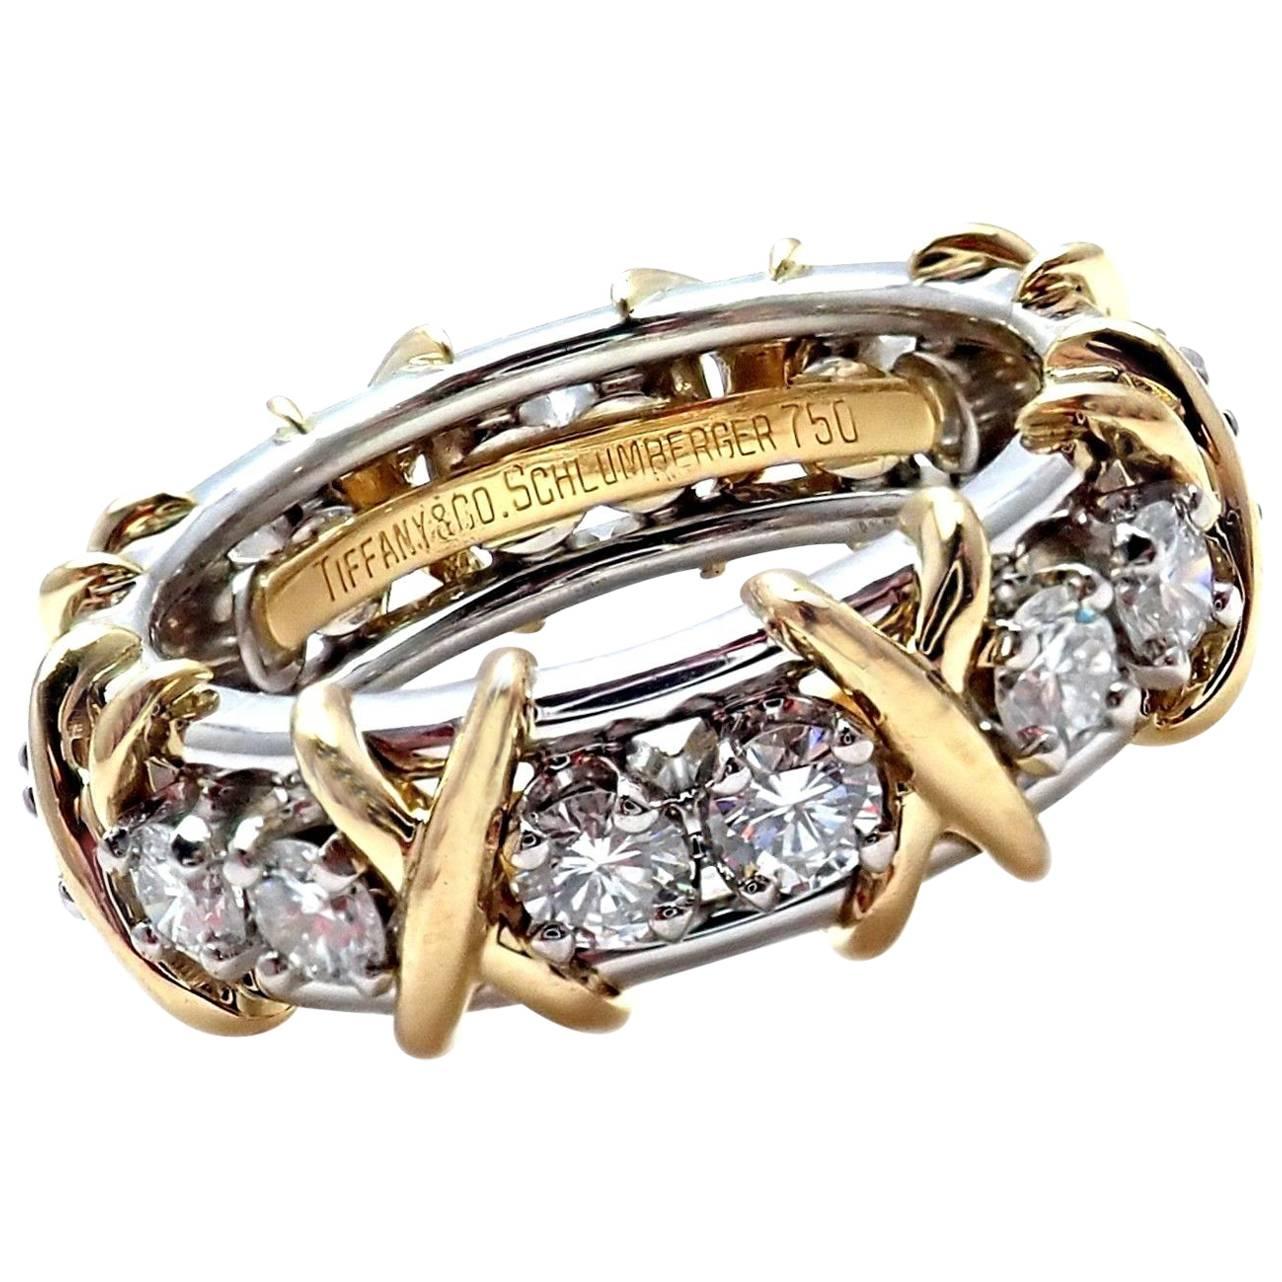 Tiffany & Co. Jean Schlumberger 18 Karat Gold Platinum Diamond Ring